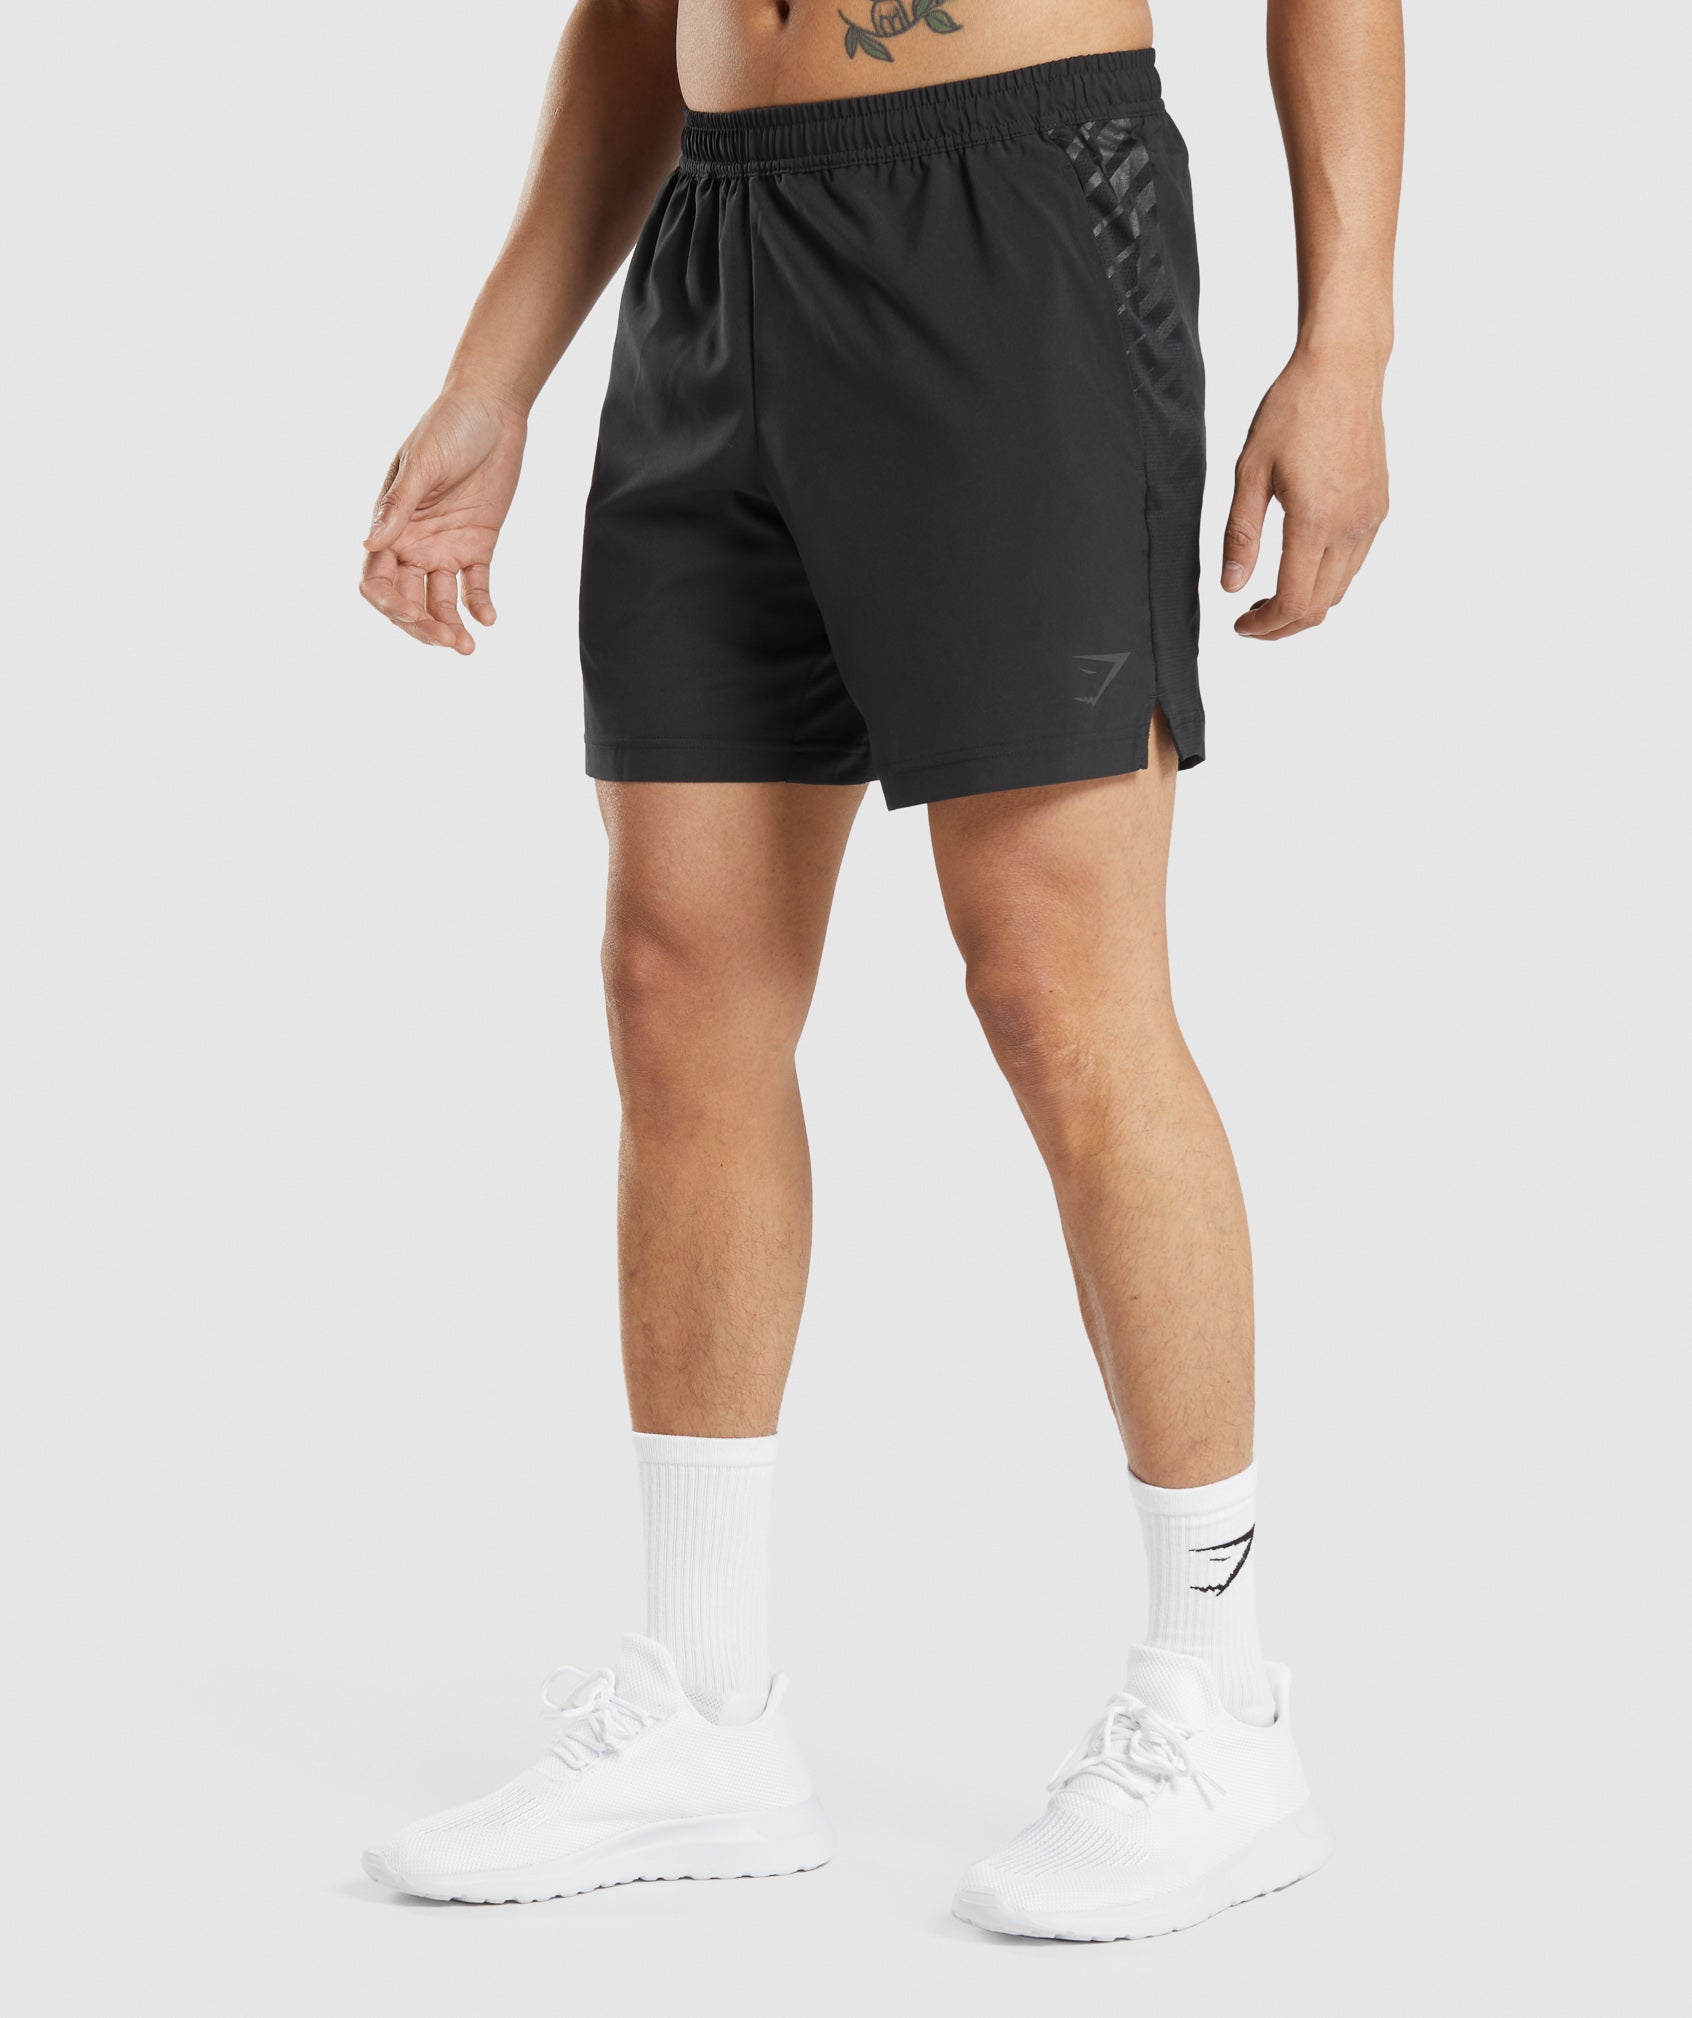 Stripe Trim Sports Shorts - WHITE M  Gym shorts womens, Gym women, Trendy  activewear